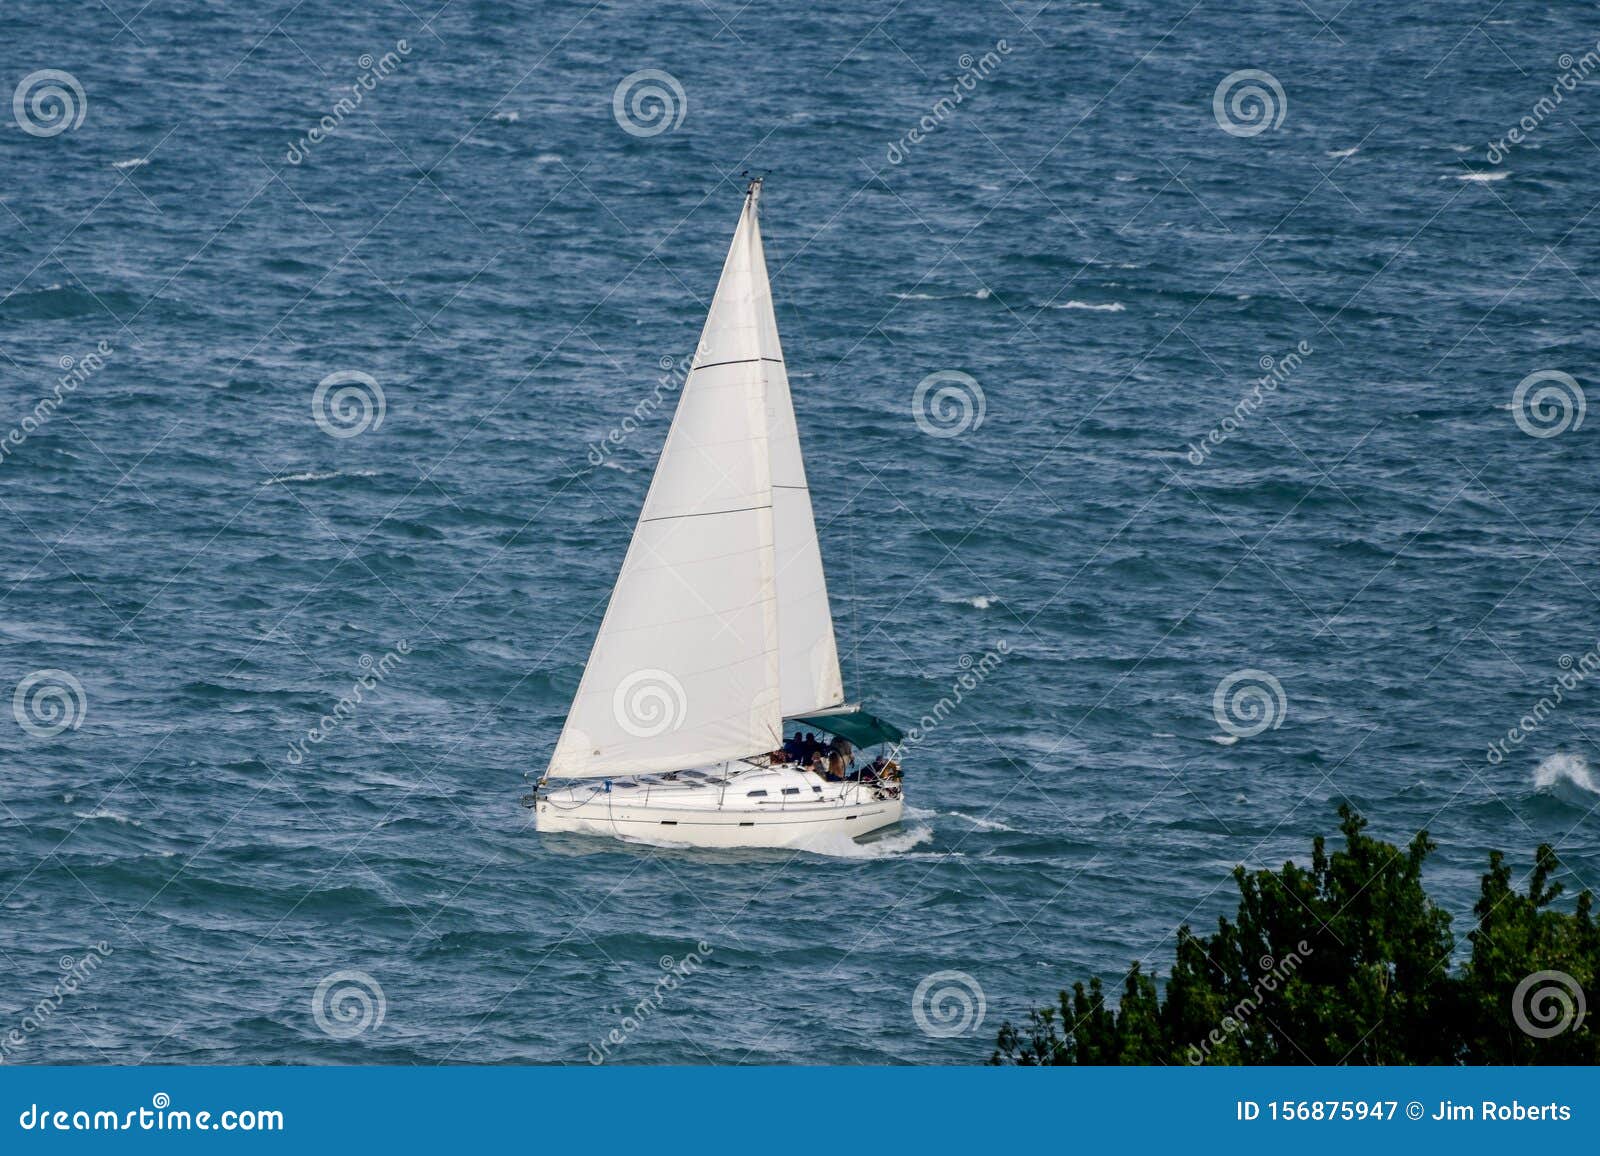 sailboating in michigan